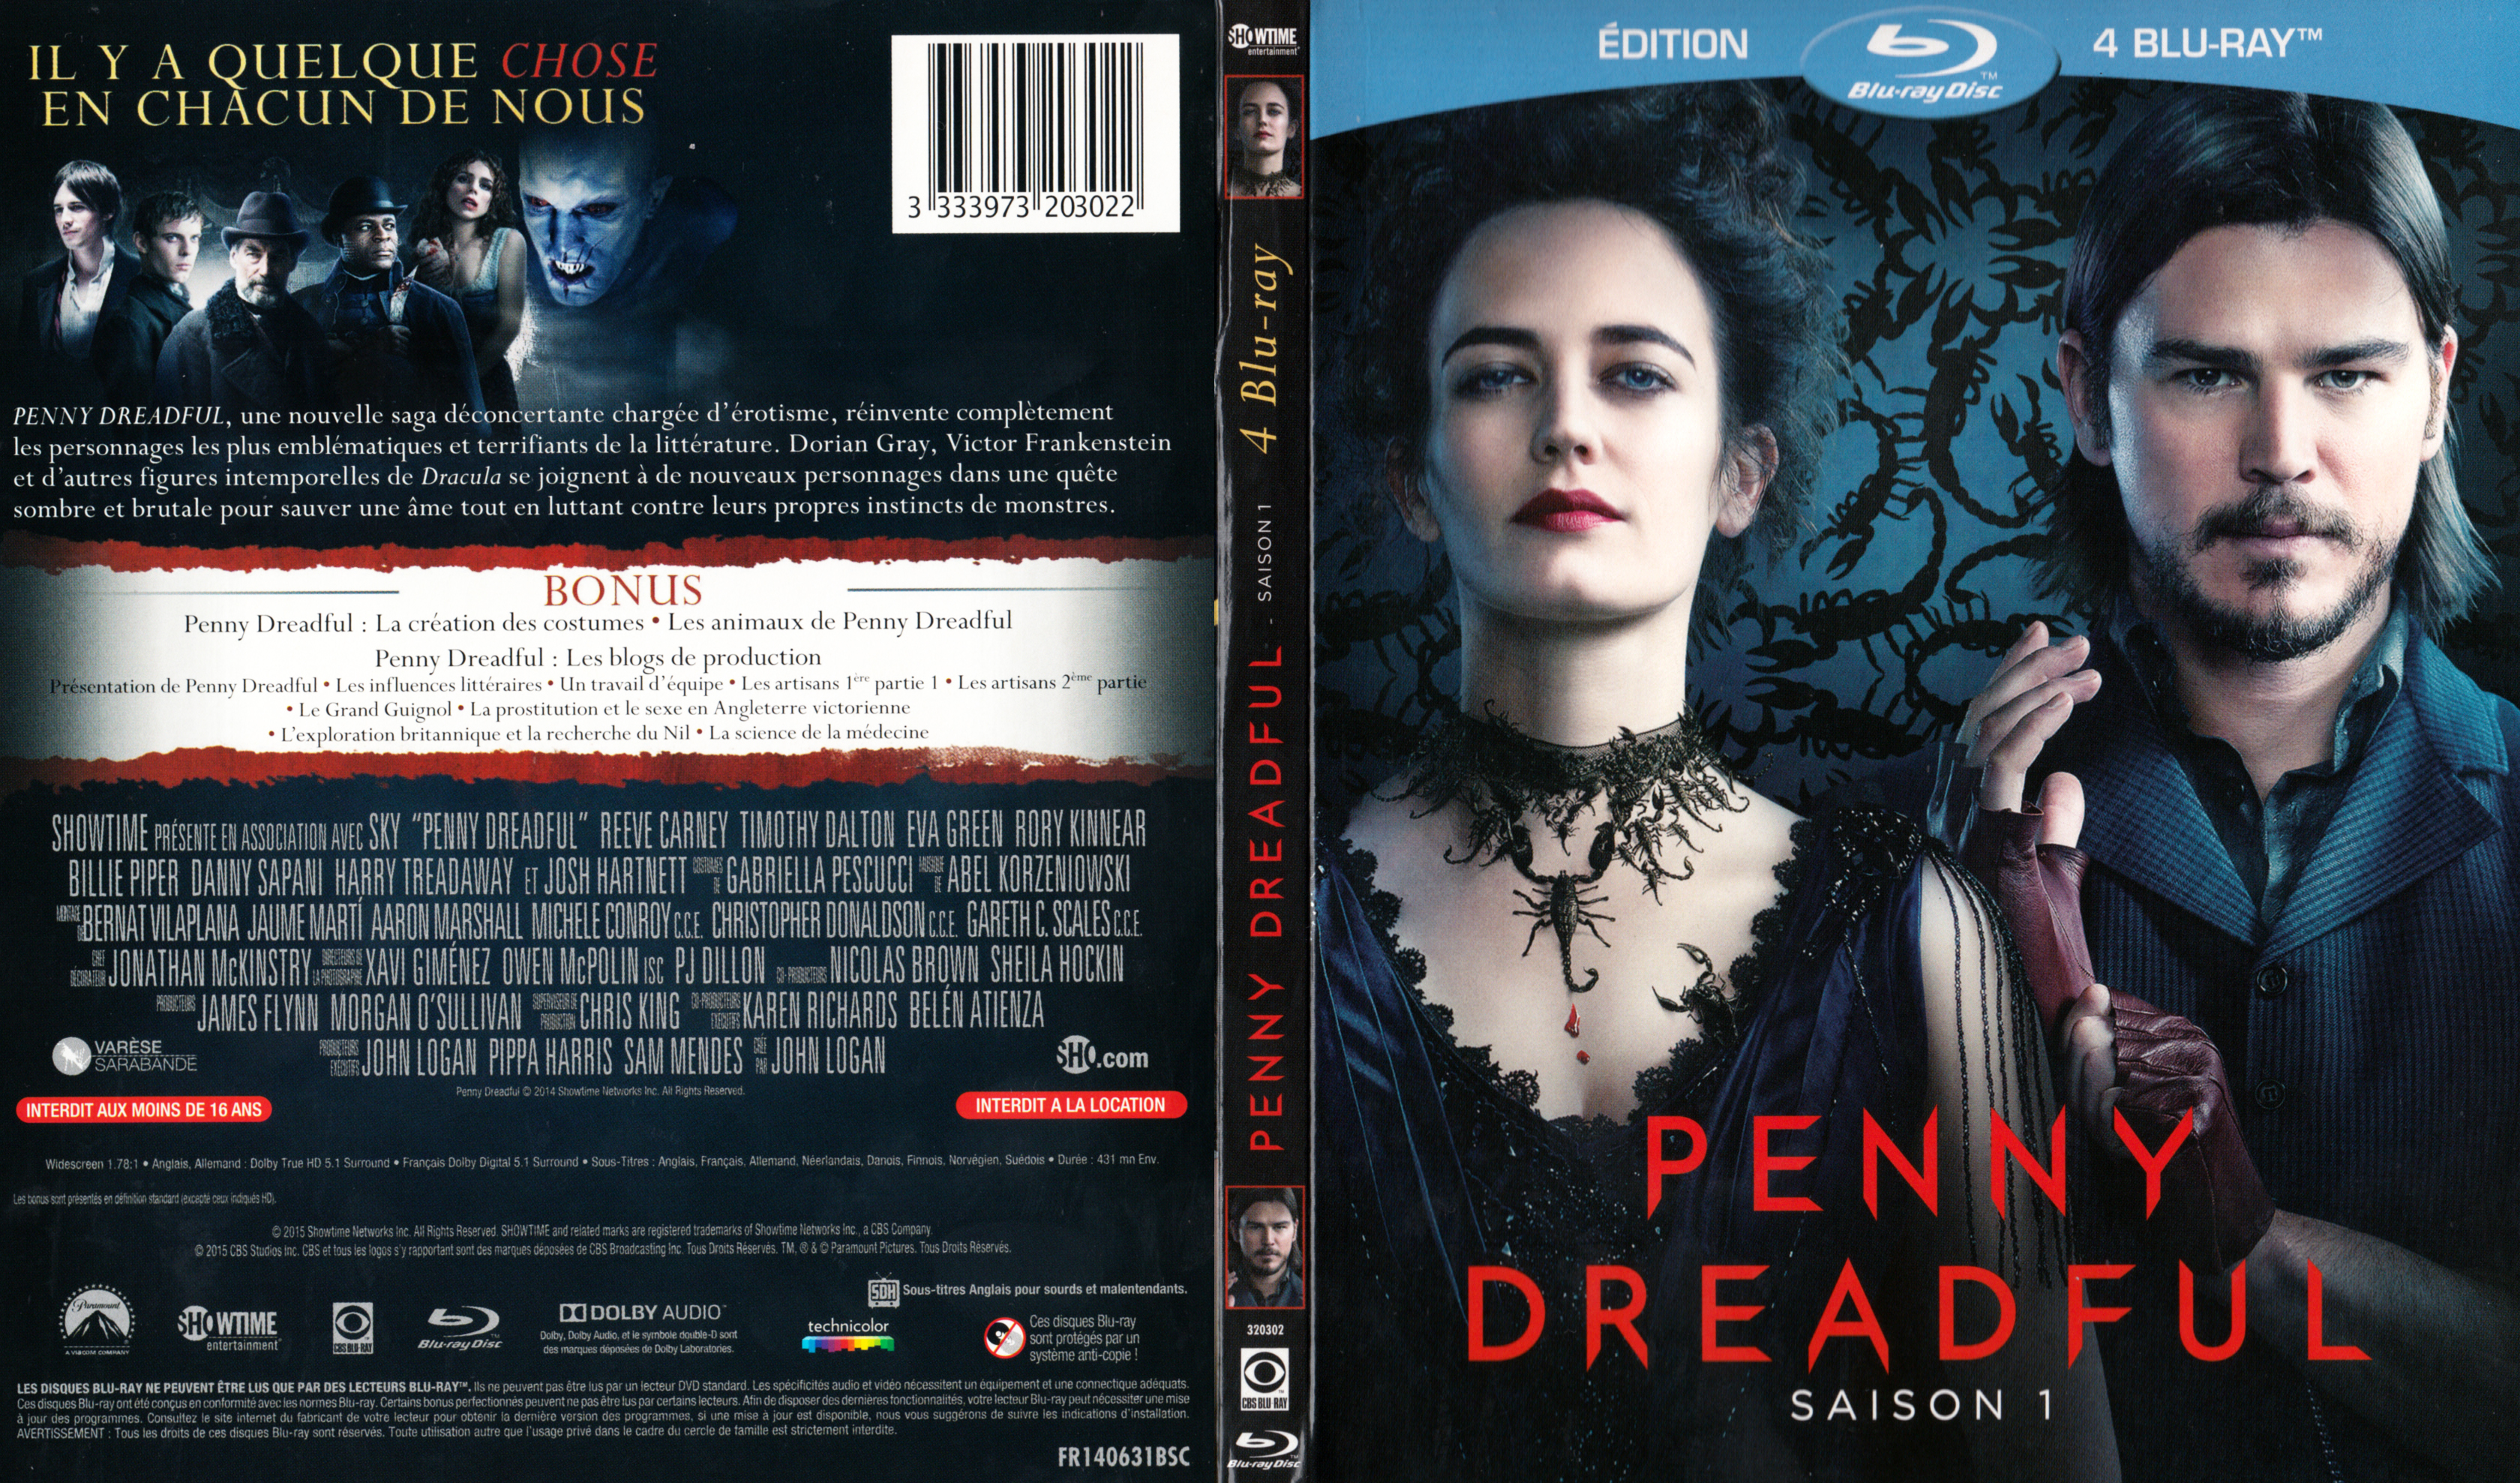 Jaquette DVD Penny Dreadful Saison 1 (BLU-RAY)